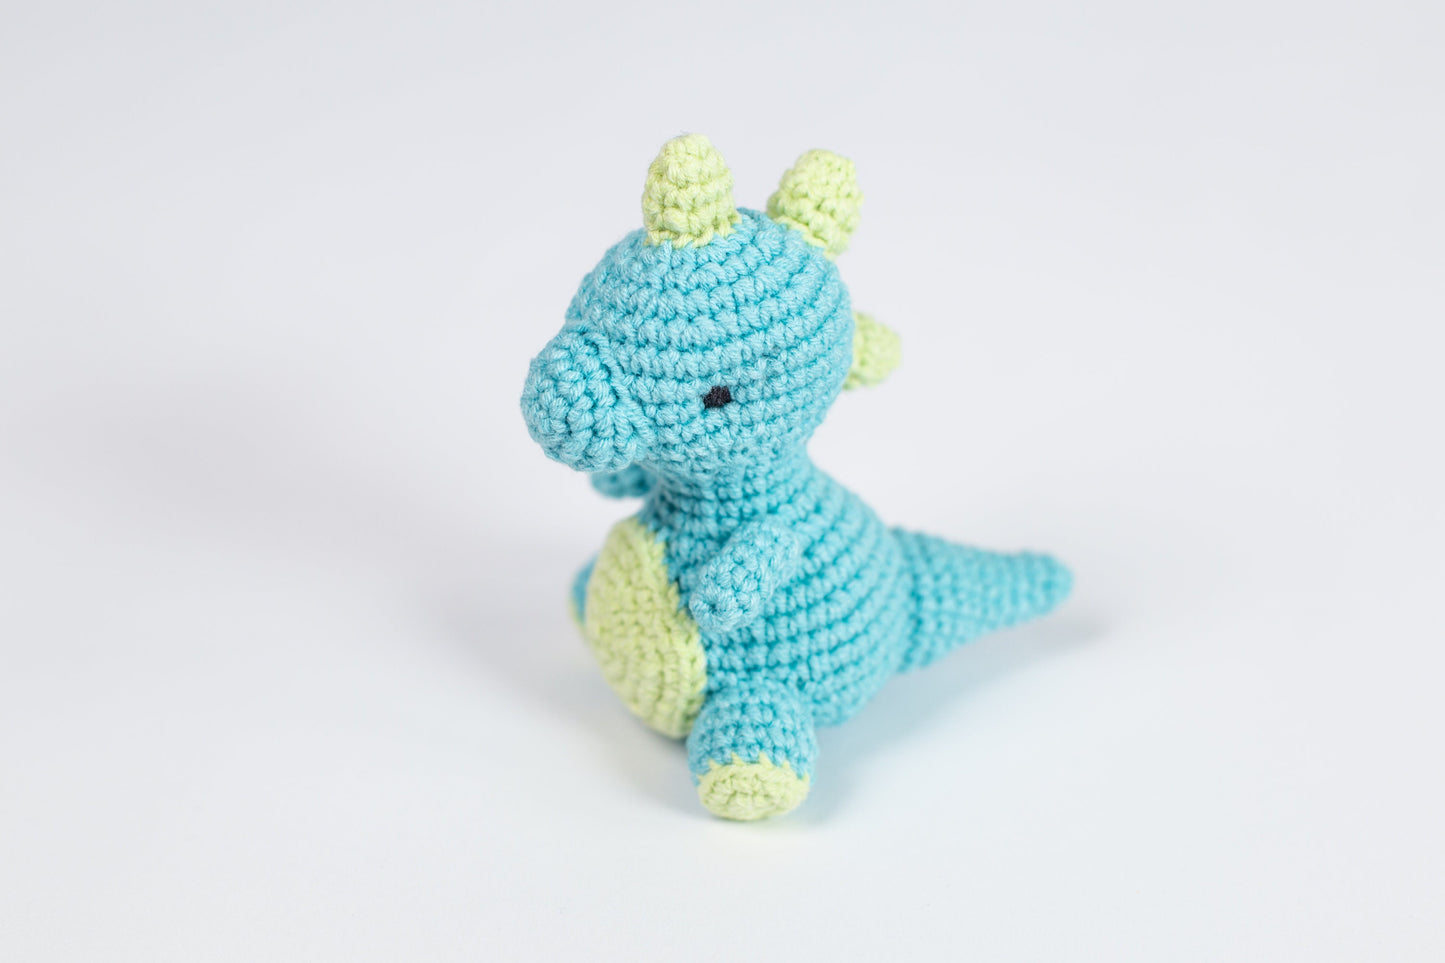 Crochet Kit for Adults Dinosaur, Beginner Crochet Kit, Animal Amigurumi DIY Craft Kit